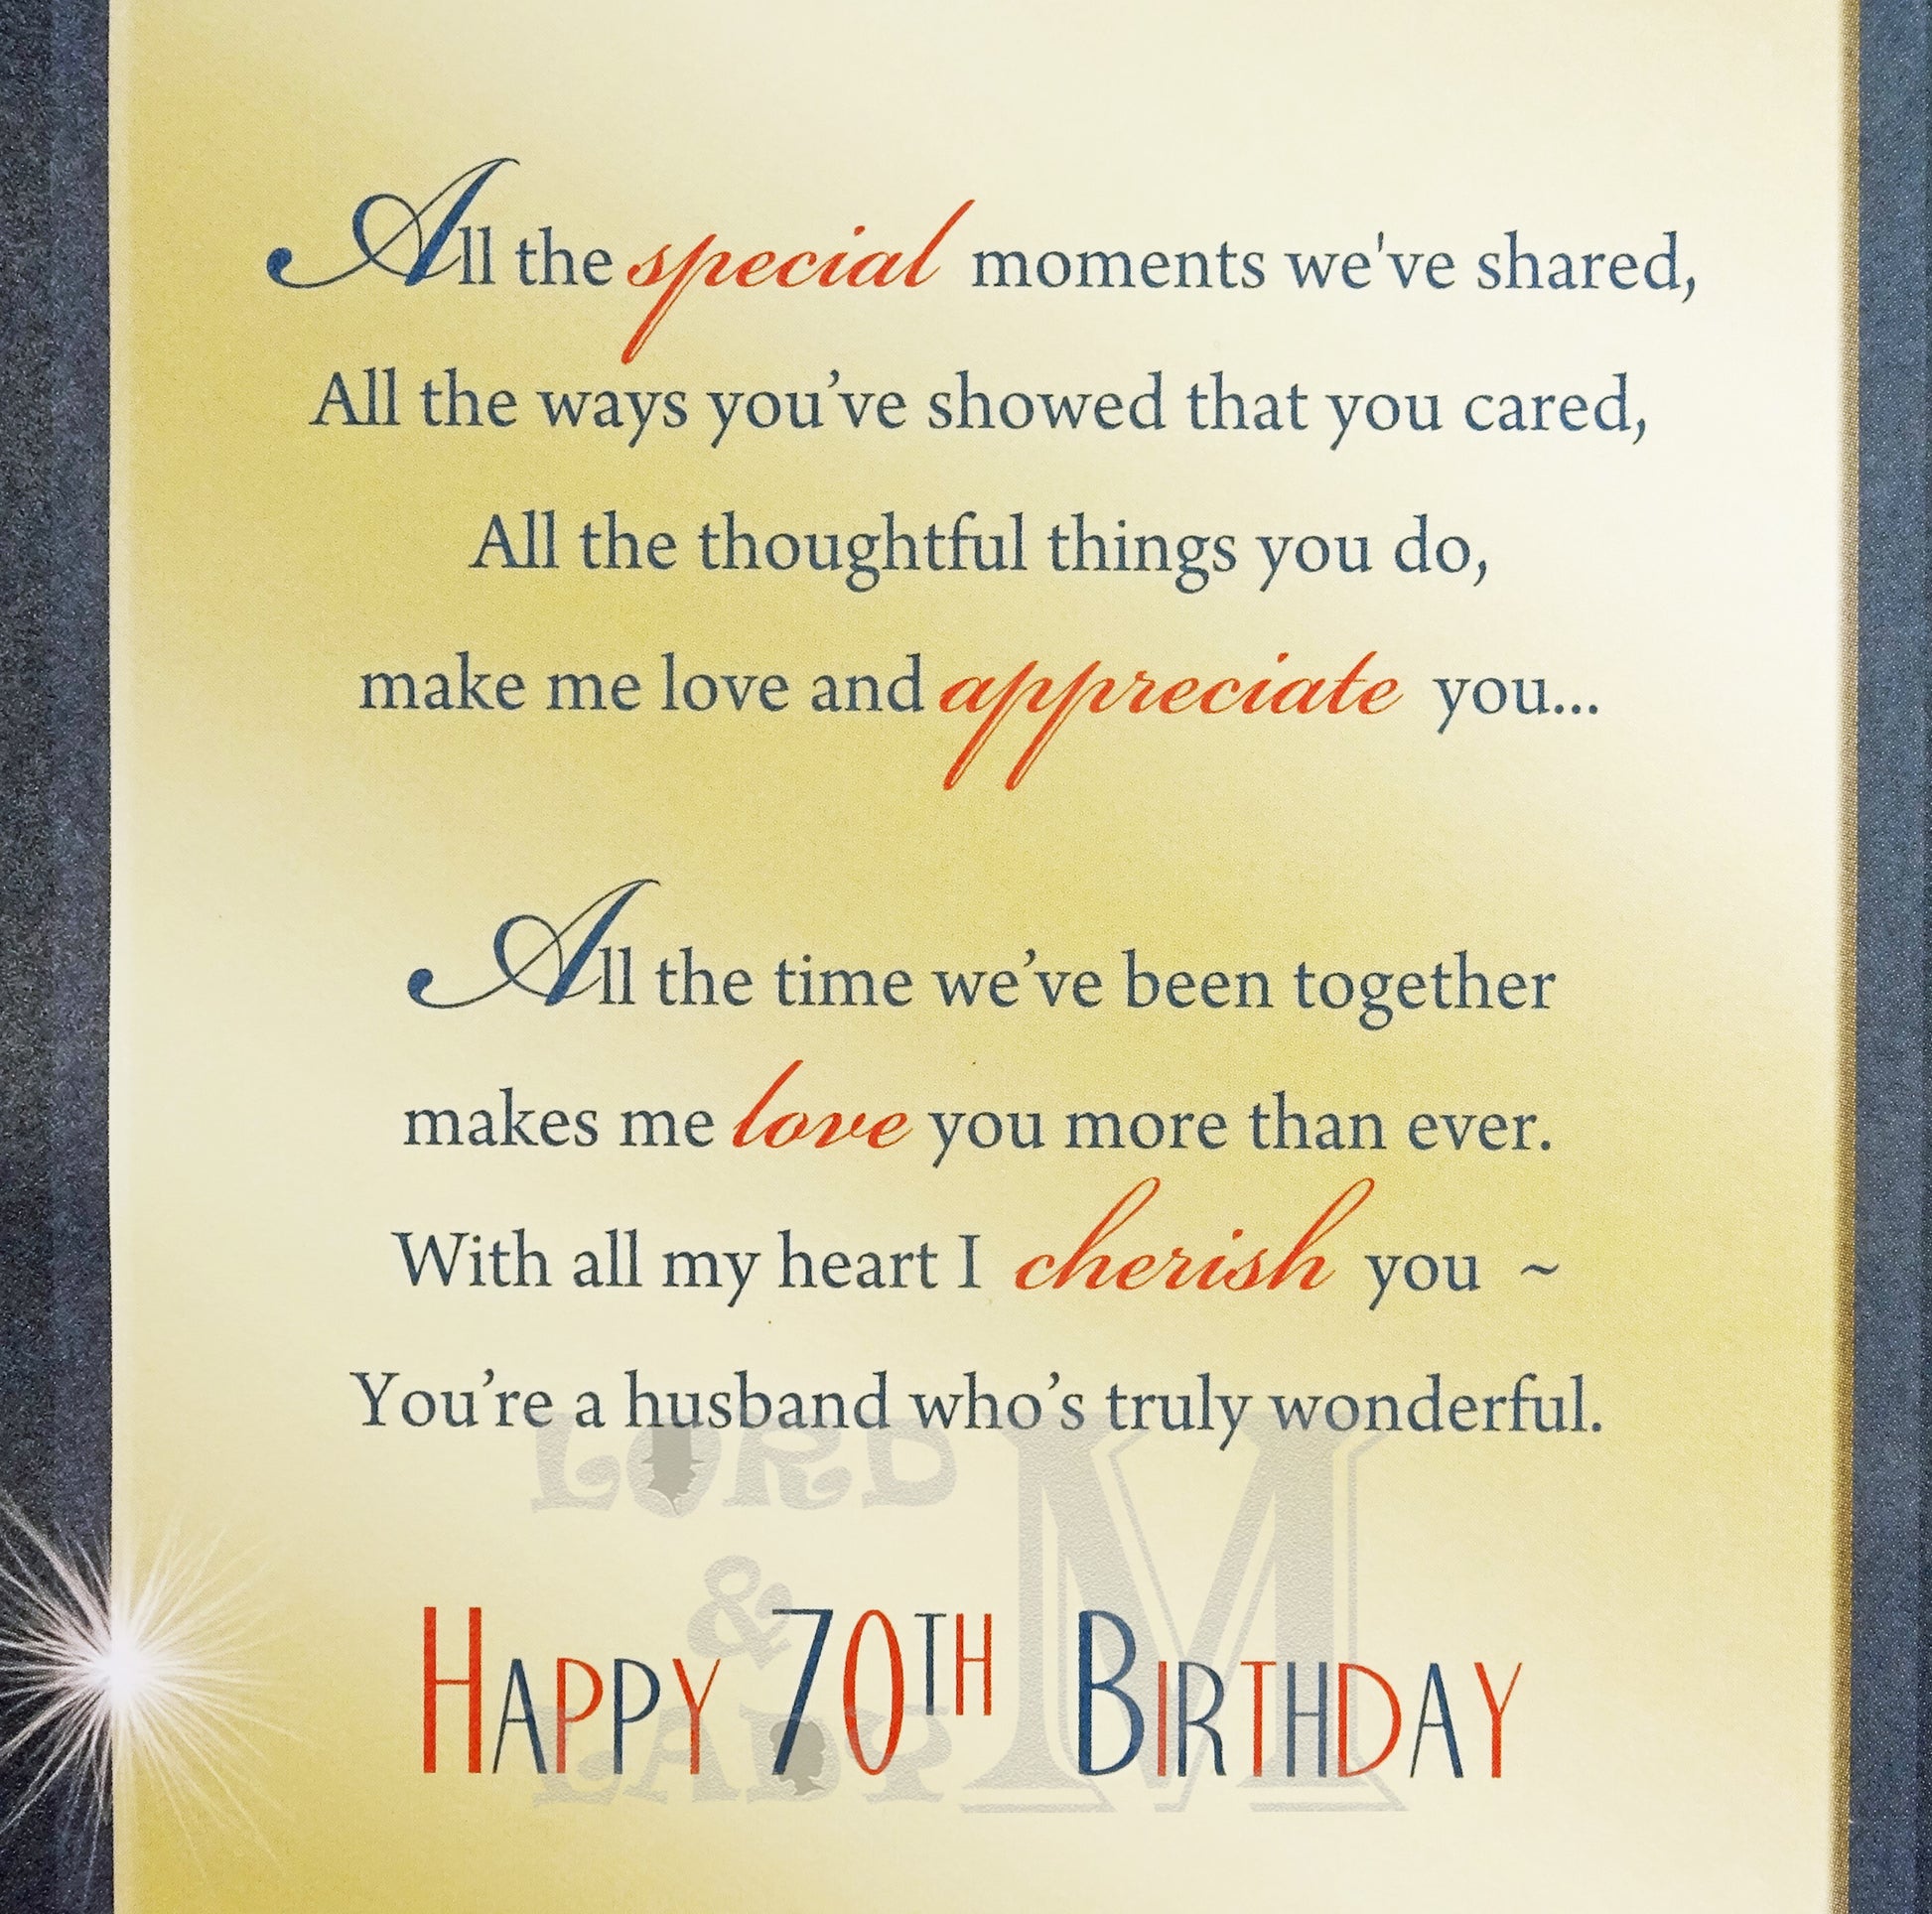 23cm - To My Dear Husband On Your Birthday - GH